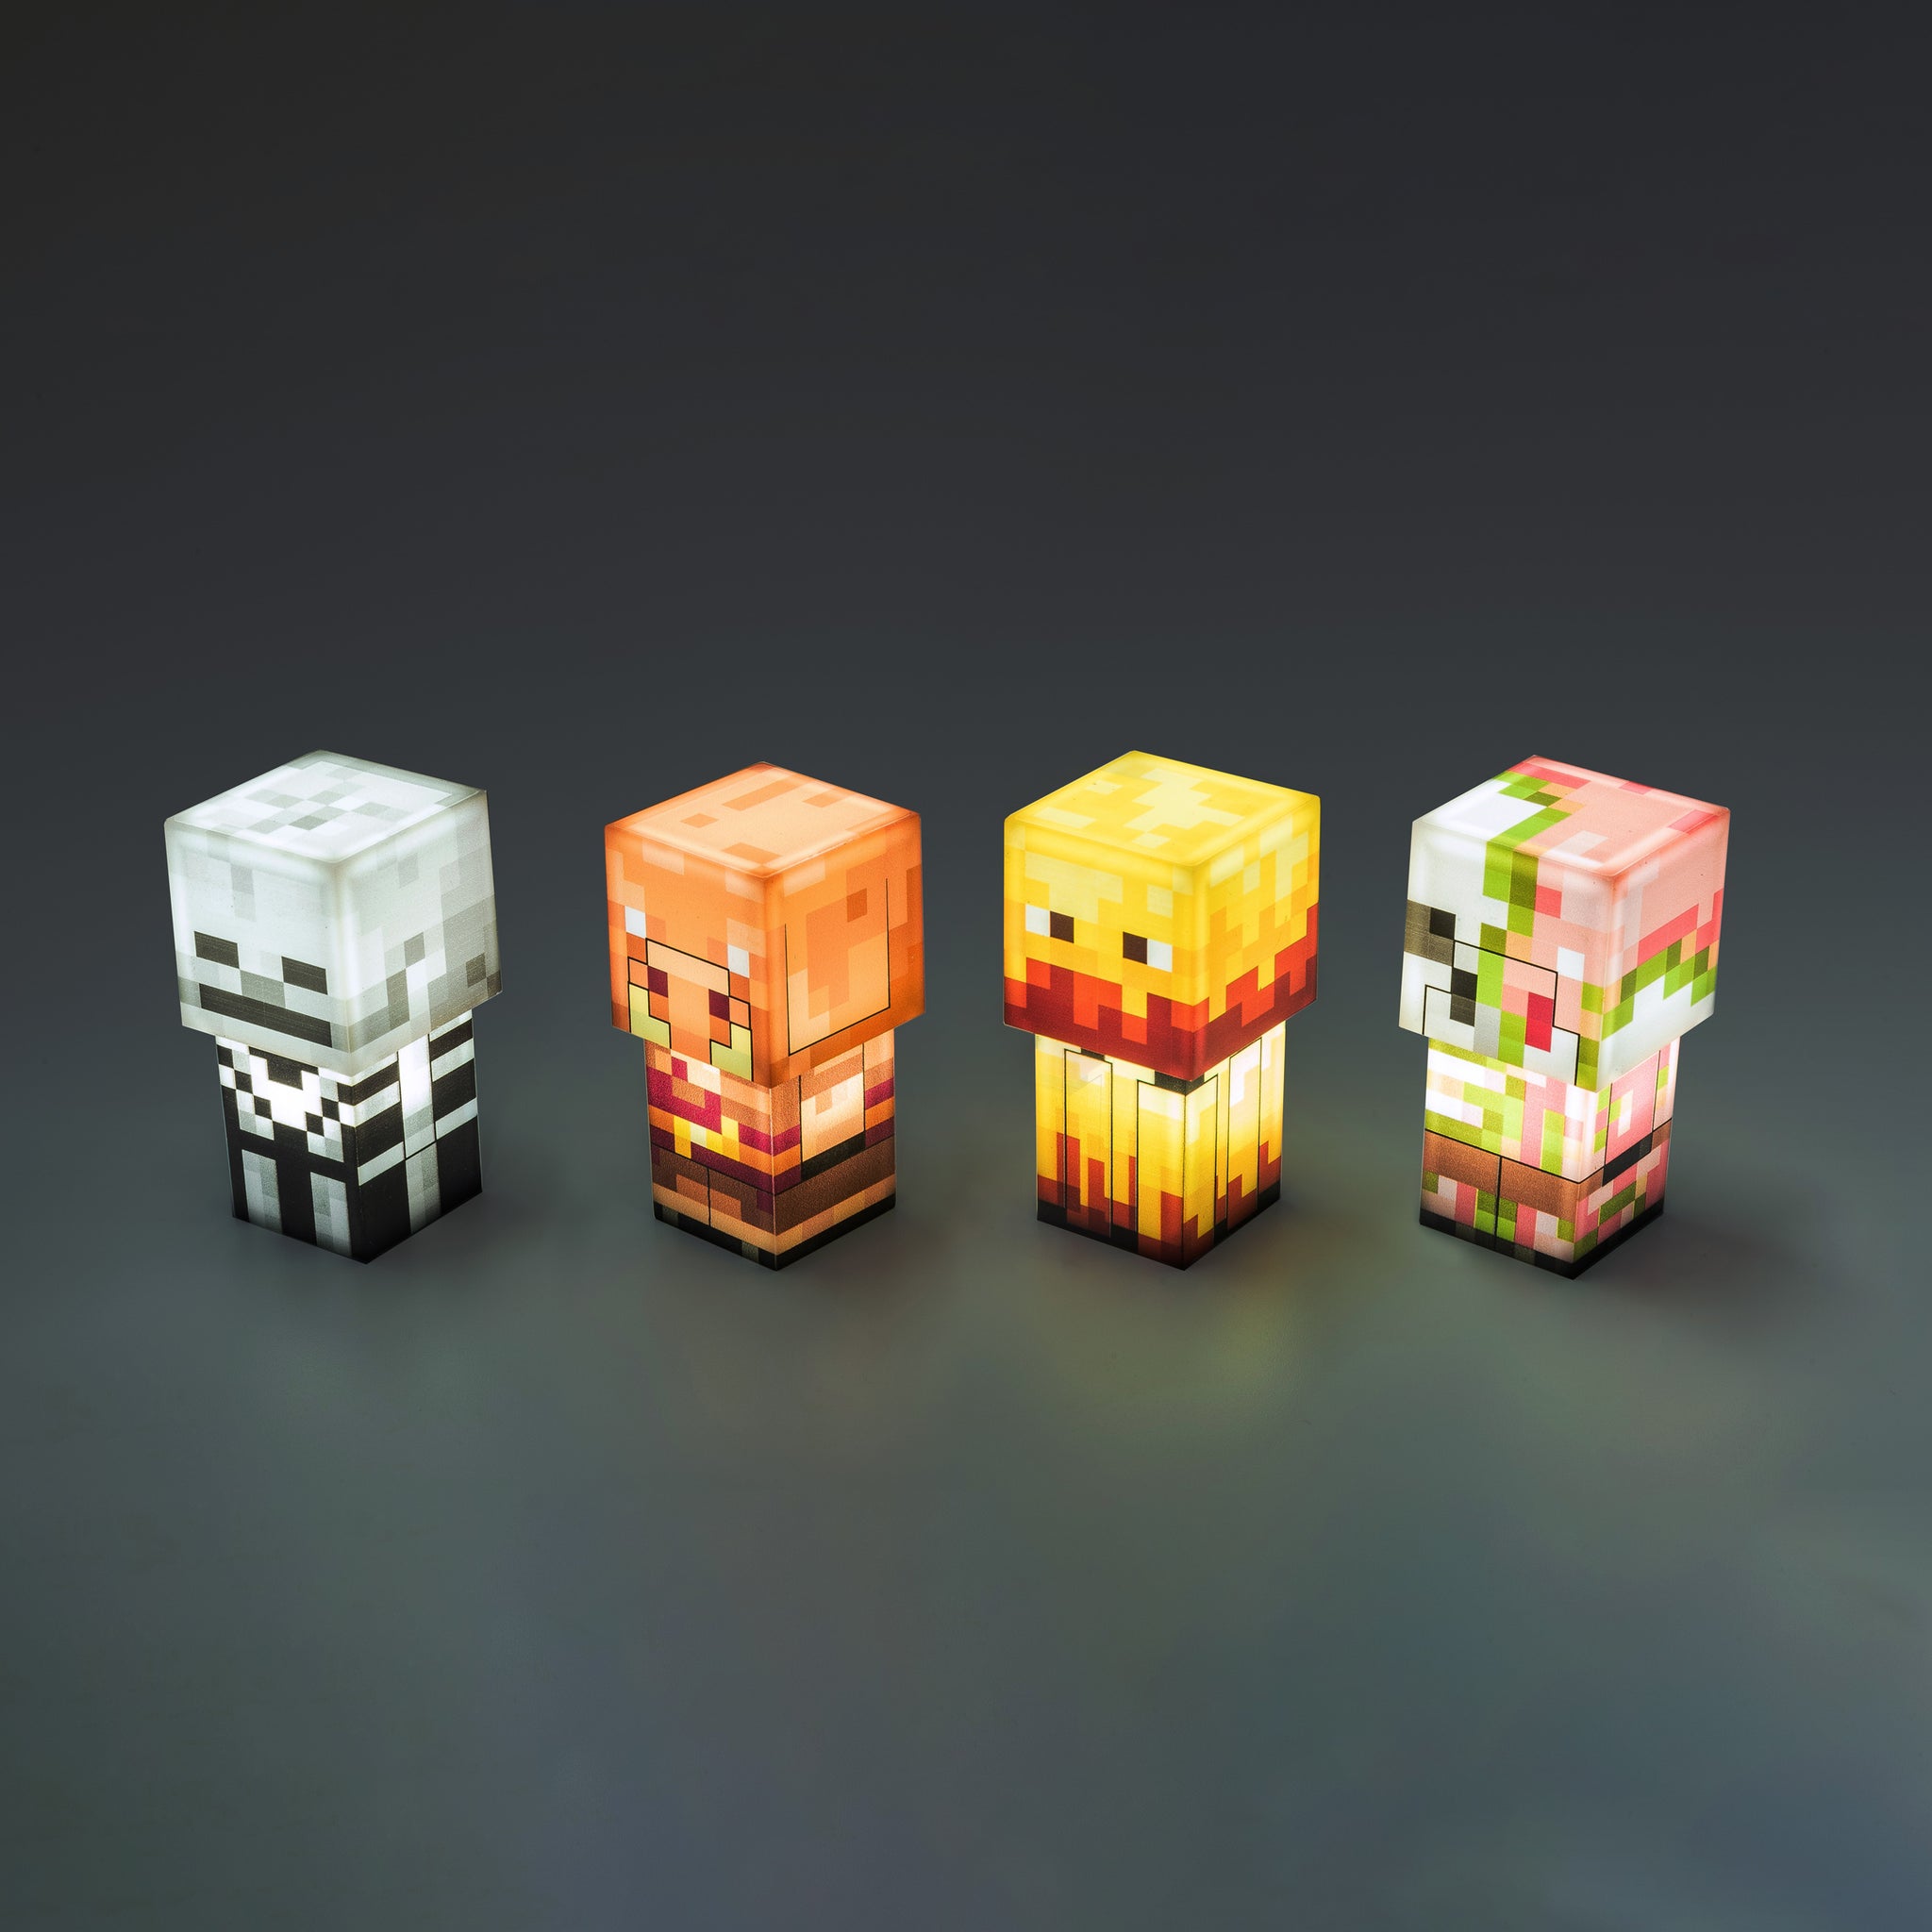 Ukonic Minecraft Mini Mob Figure Mood Lights  Skeleton, Blaze, Piglin,  Zombified Piglin : Target